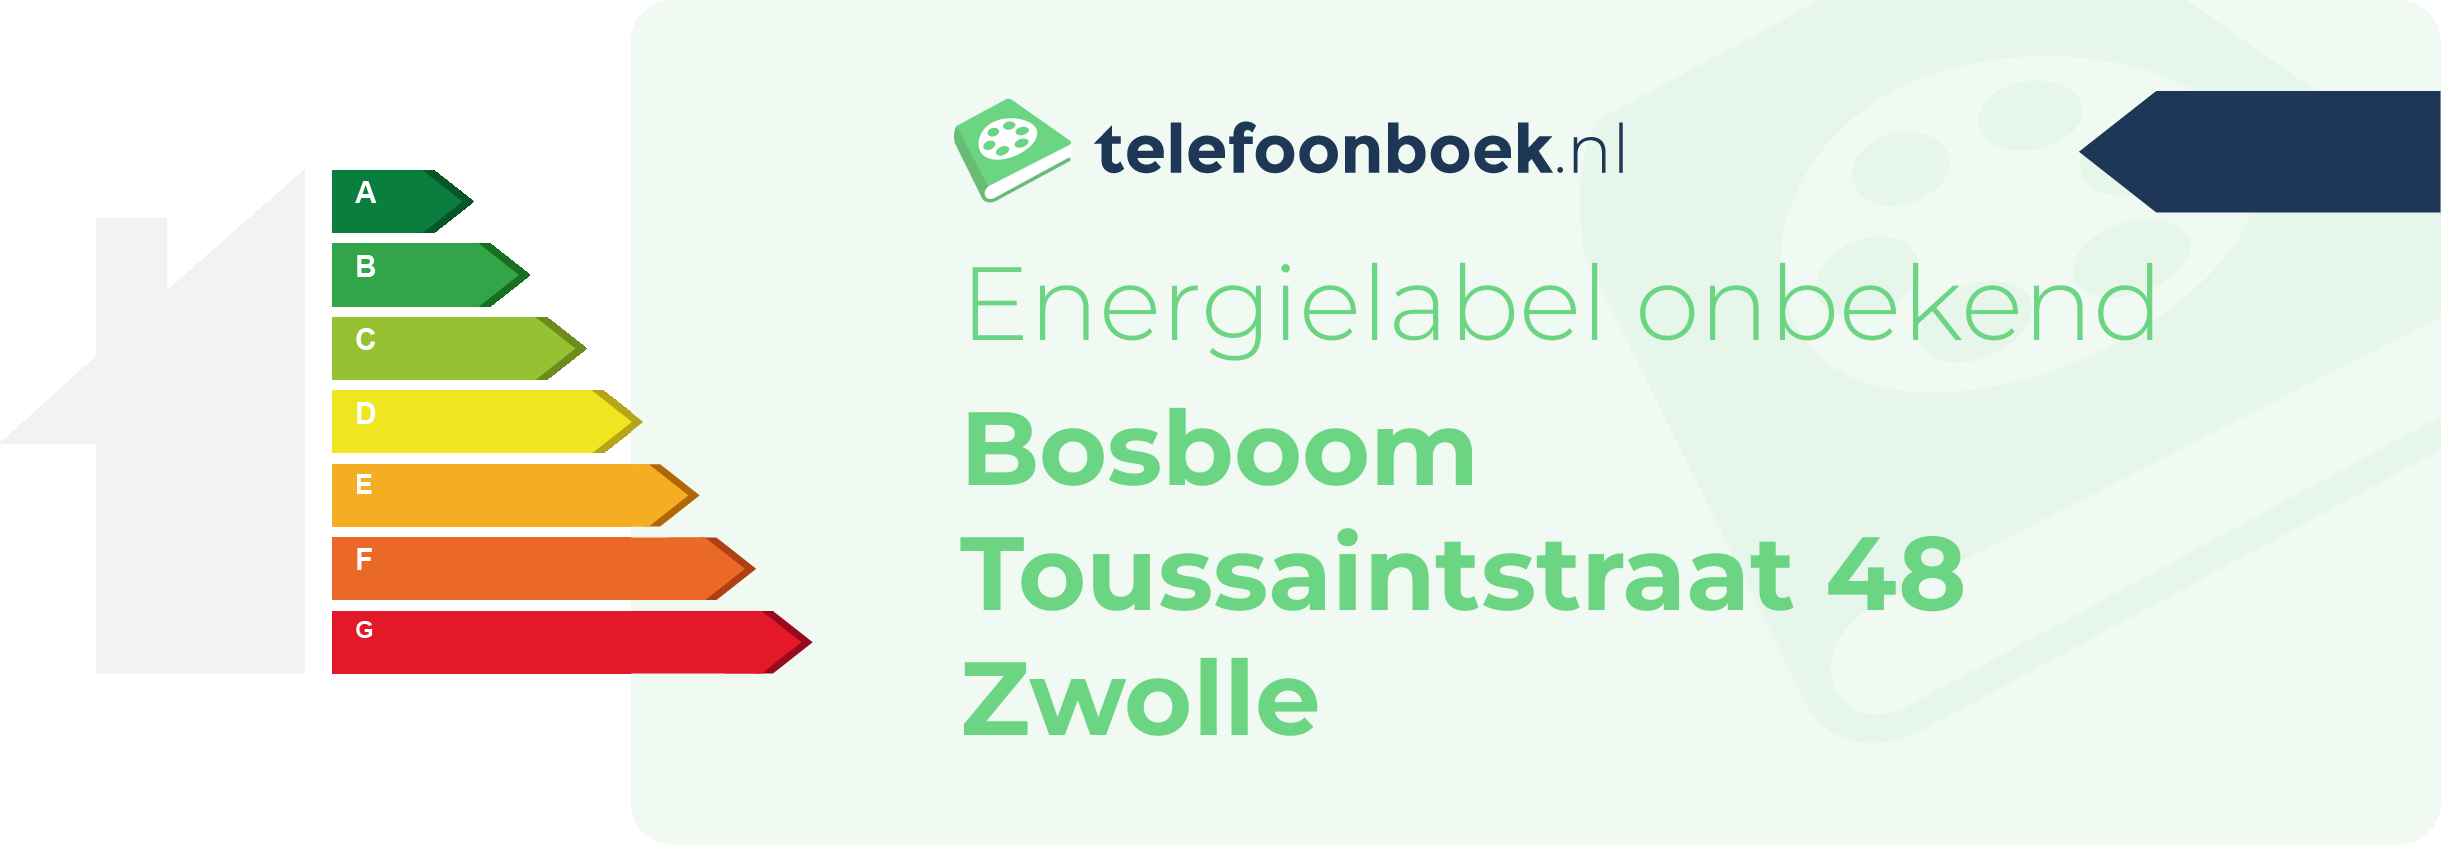 Energielabel Bosboom Toussaintstraat 48 Zwolle